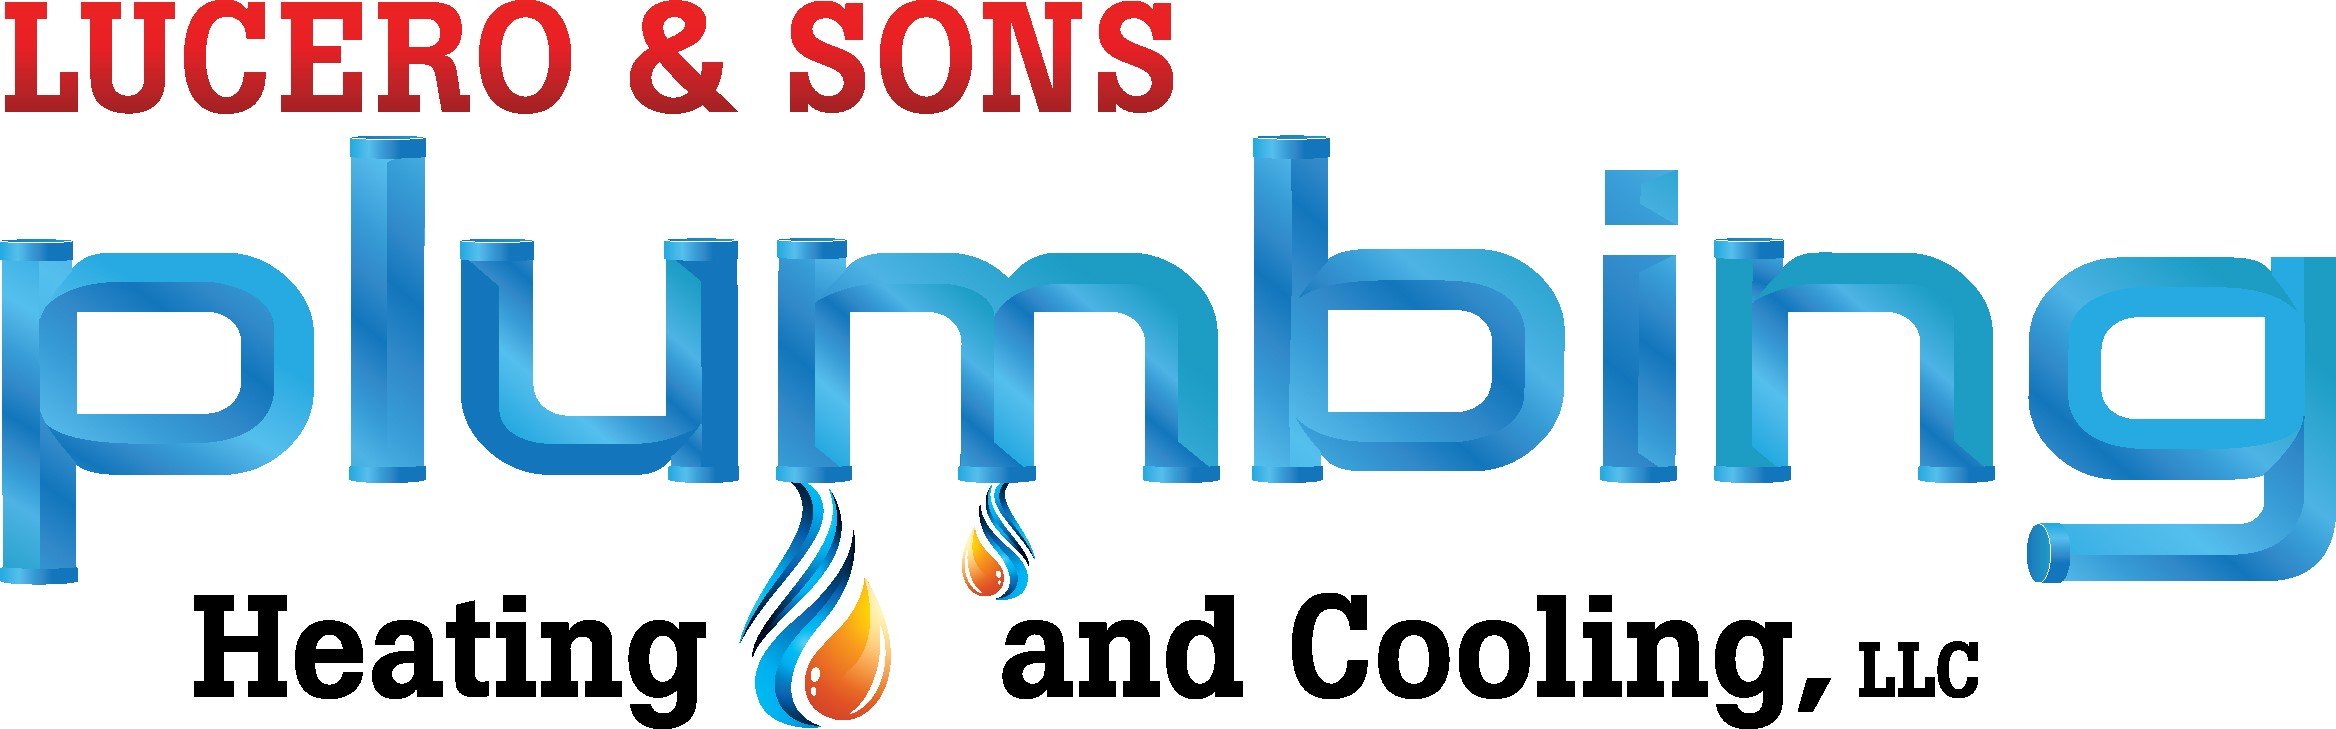 Lucero & Sons Plumbing, Heating & Cooling Logo